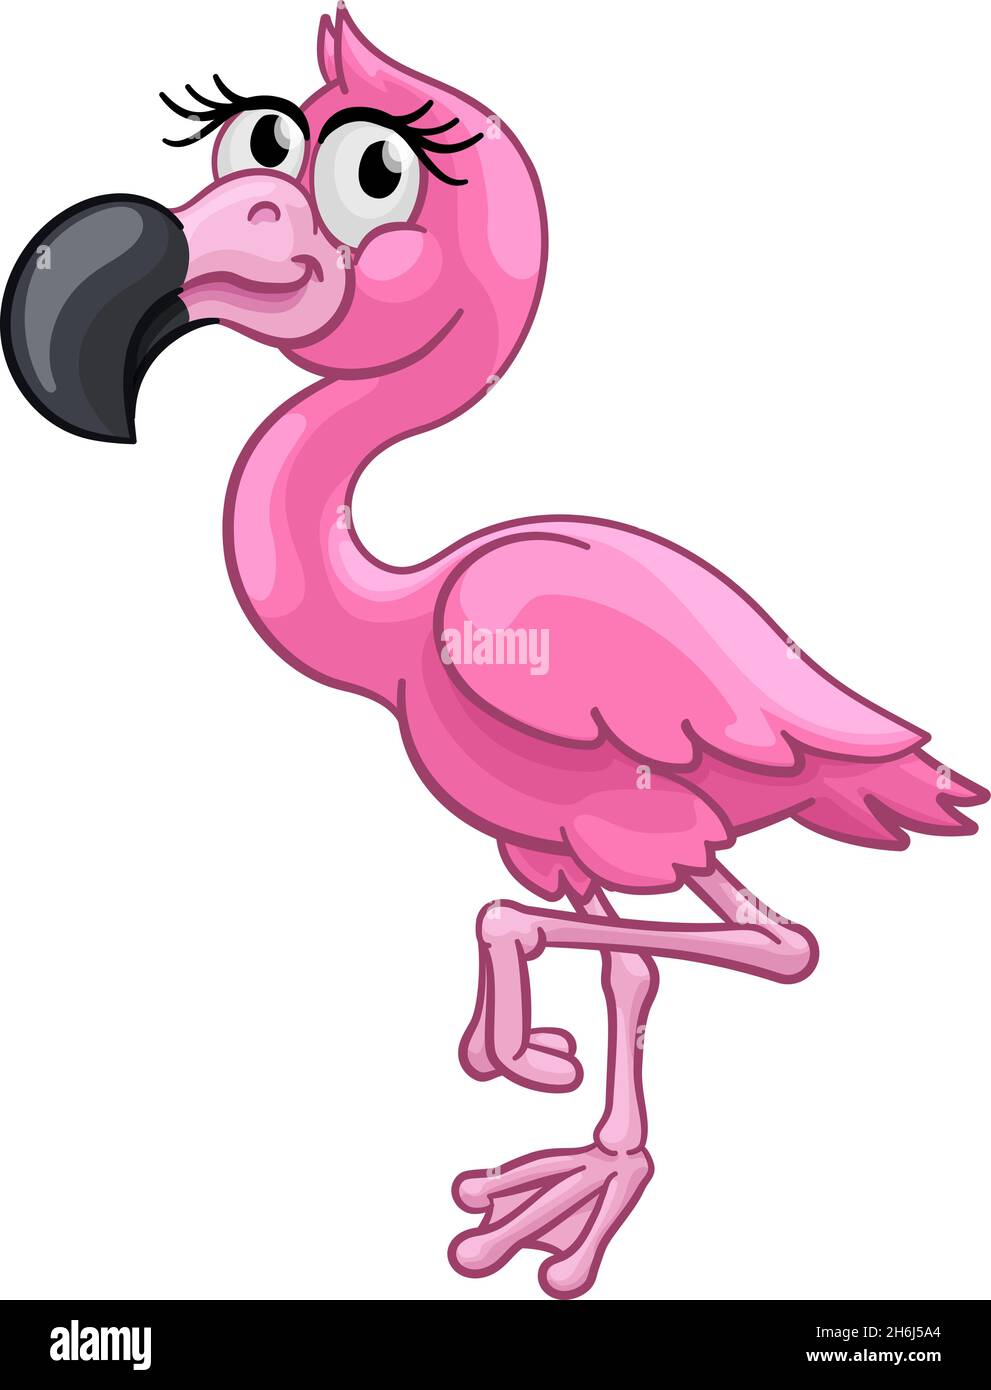 Cartoon-Illustration Des Pinken Flamingo-Vogels Mit Tiermotiv Stock Vektor